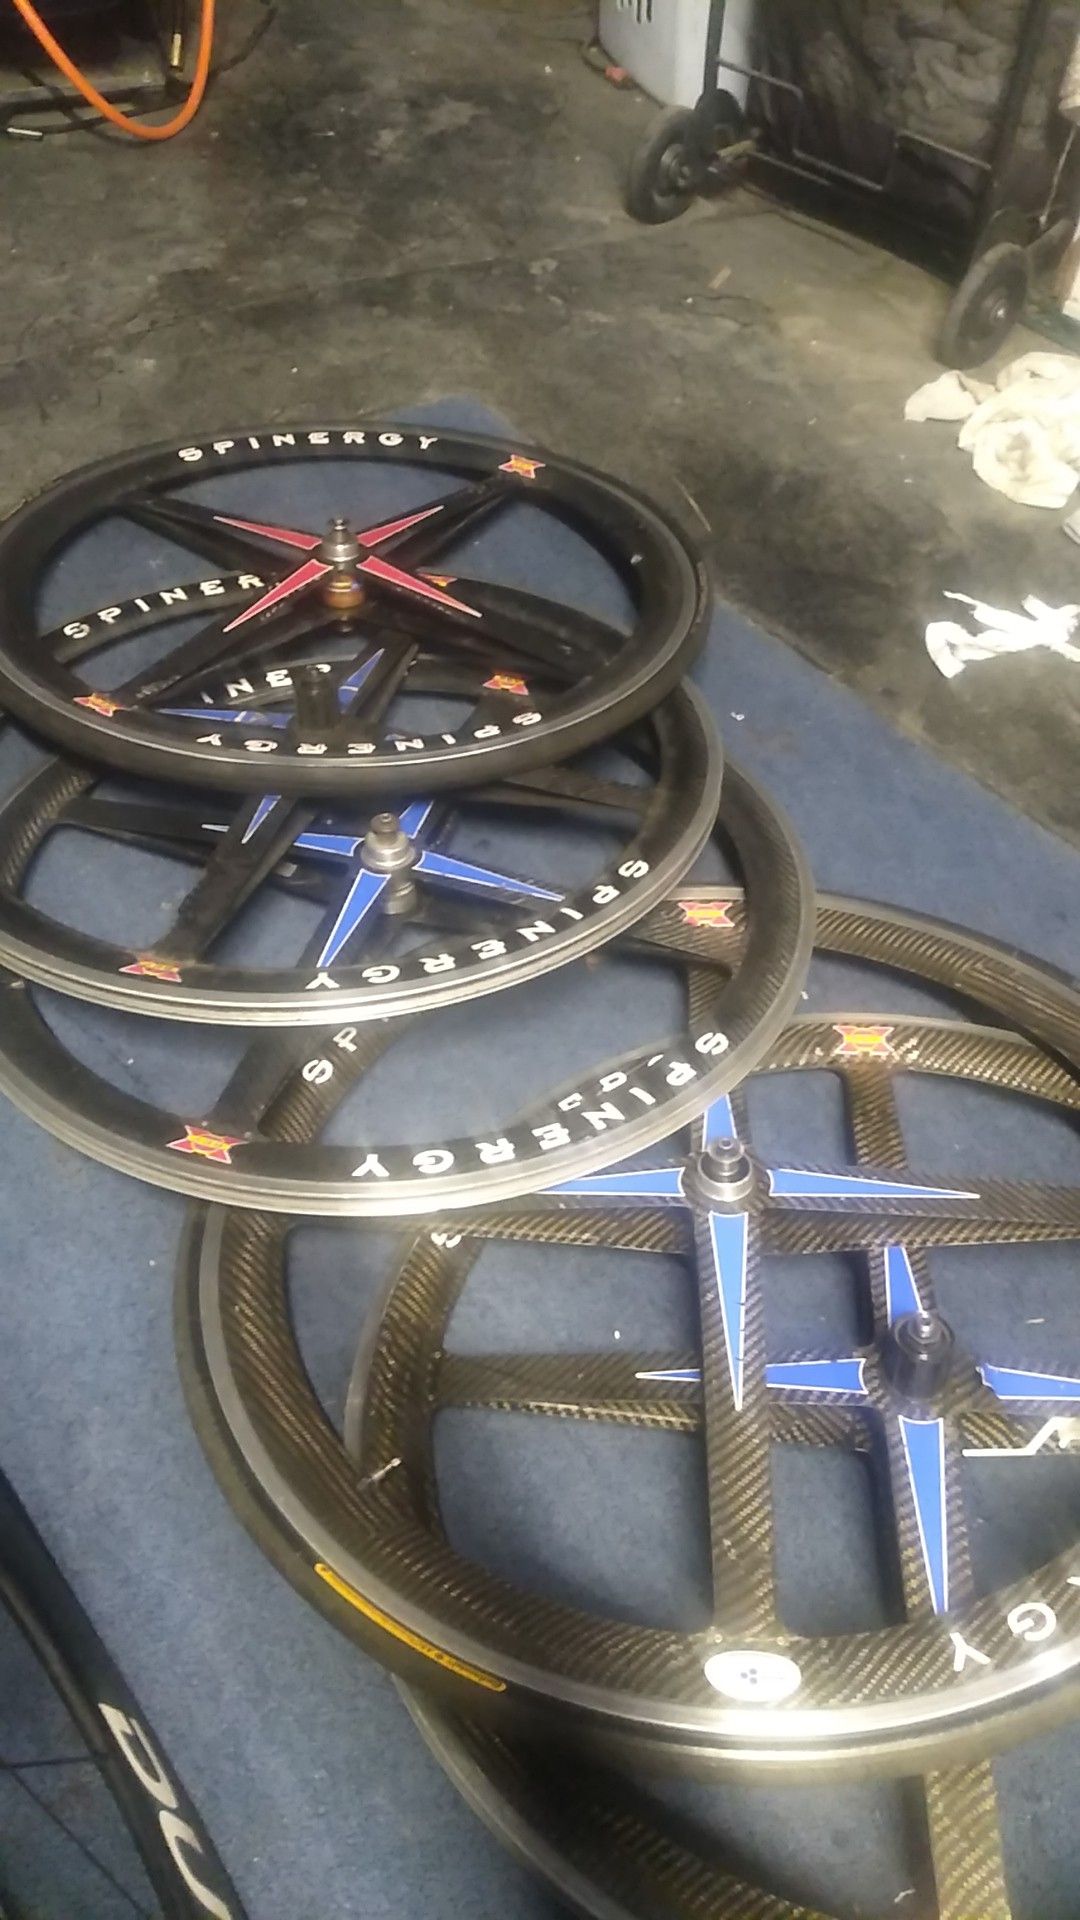 Spinergy revx carbon fiber wheels